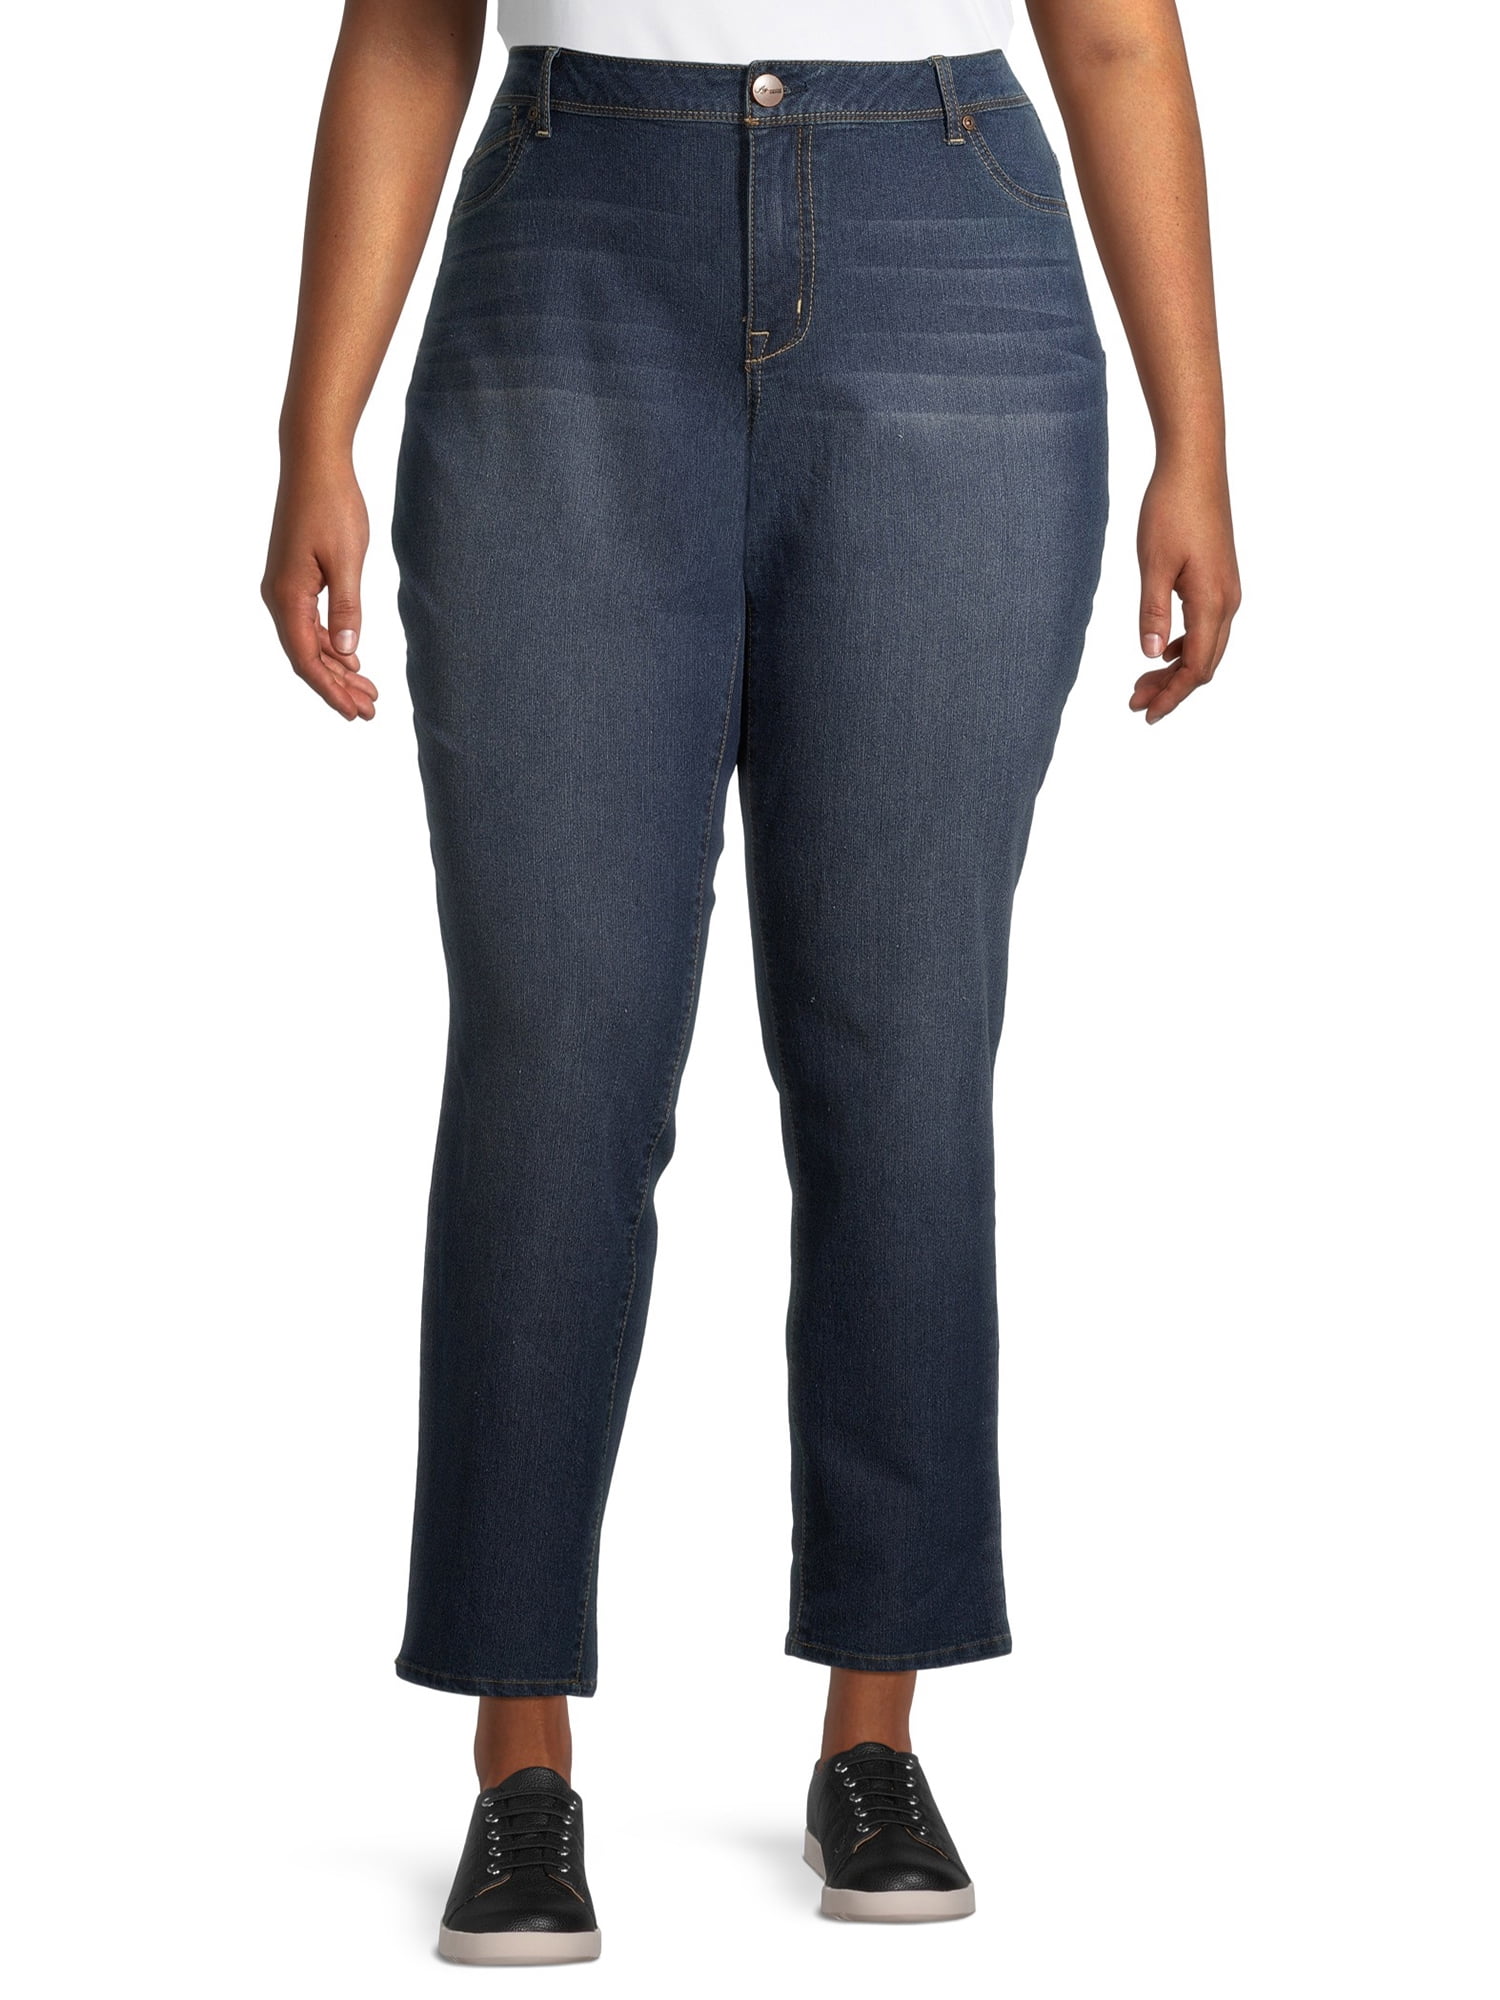 A3 Denim Women's Plus Size Straight Leg Jeans - Walmart.com